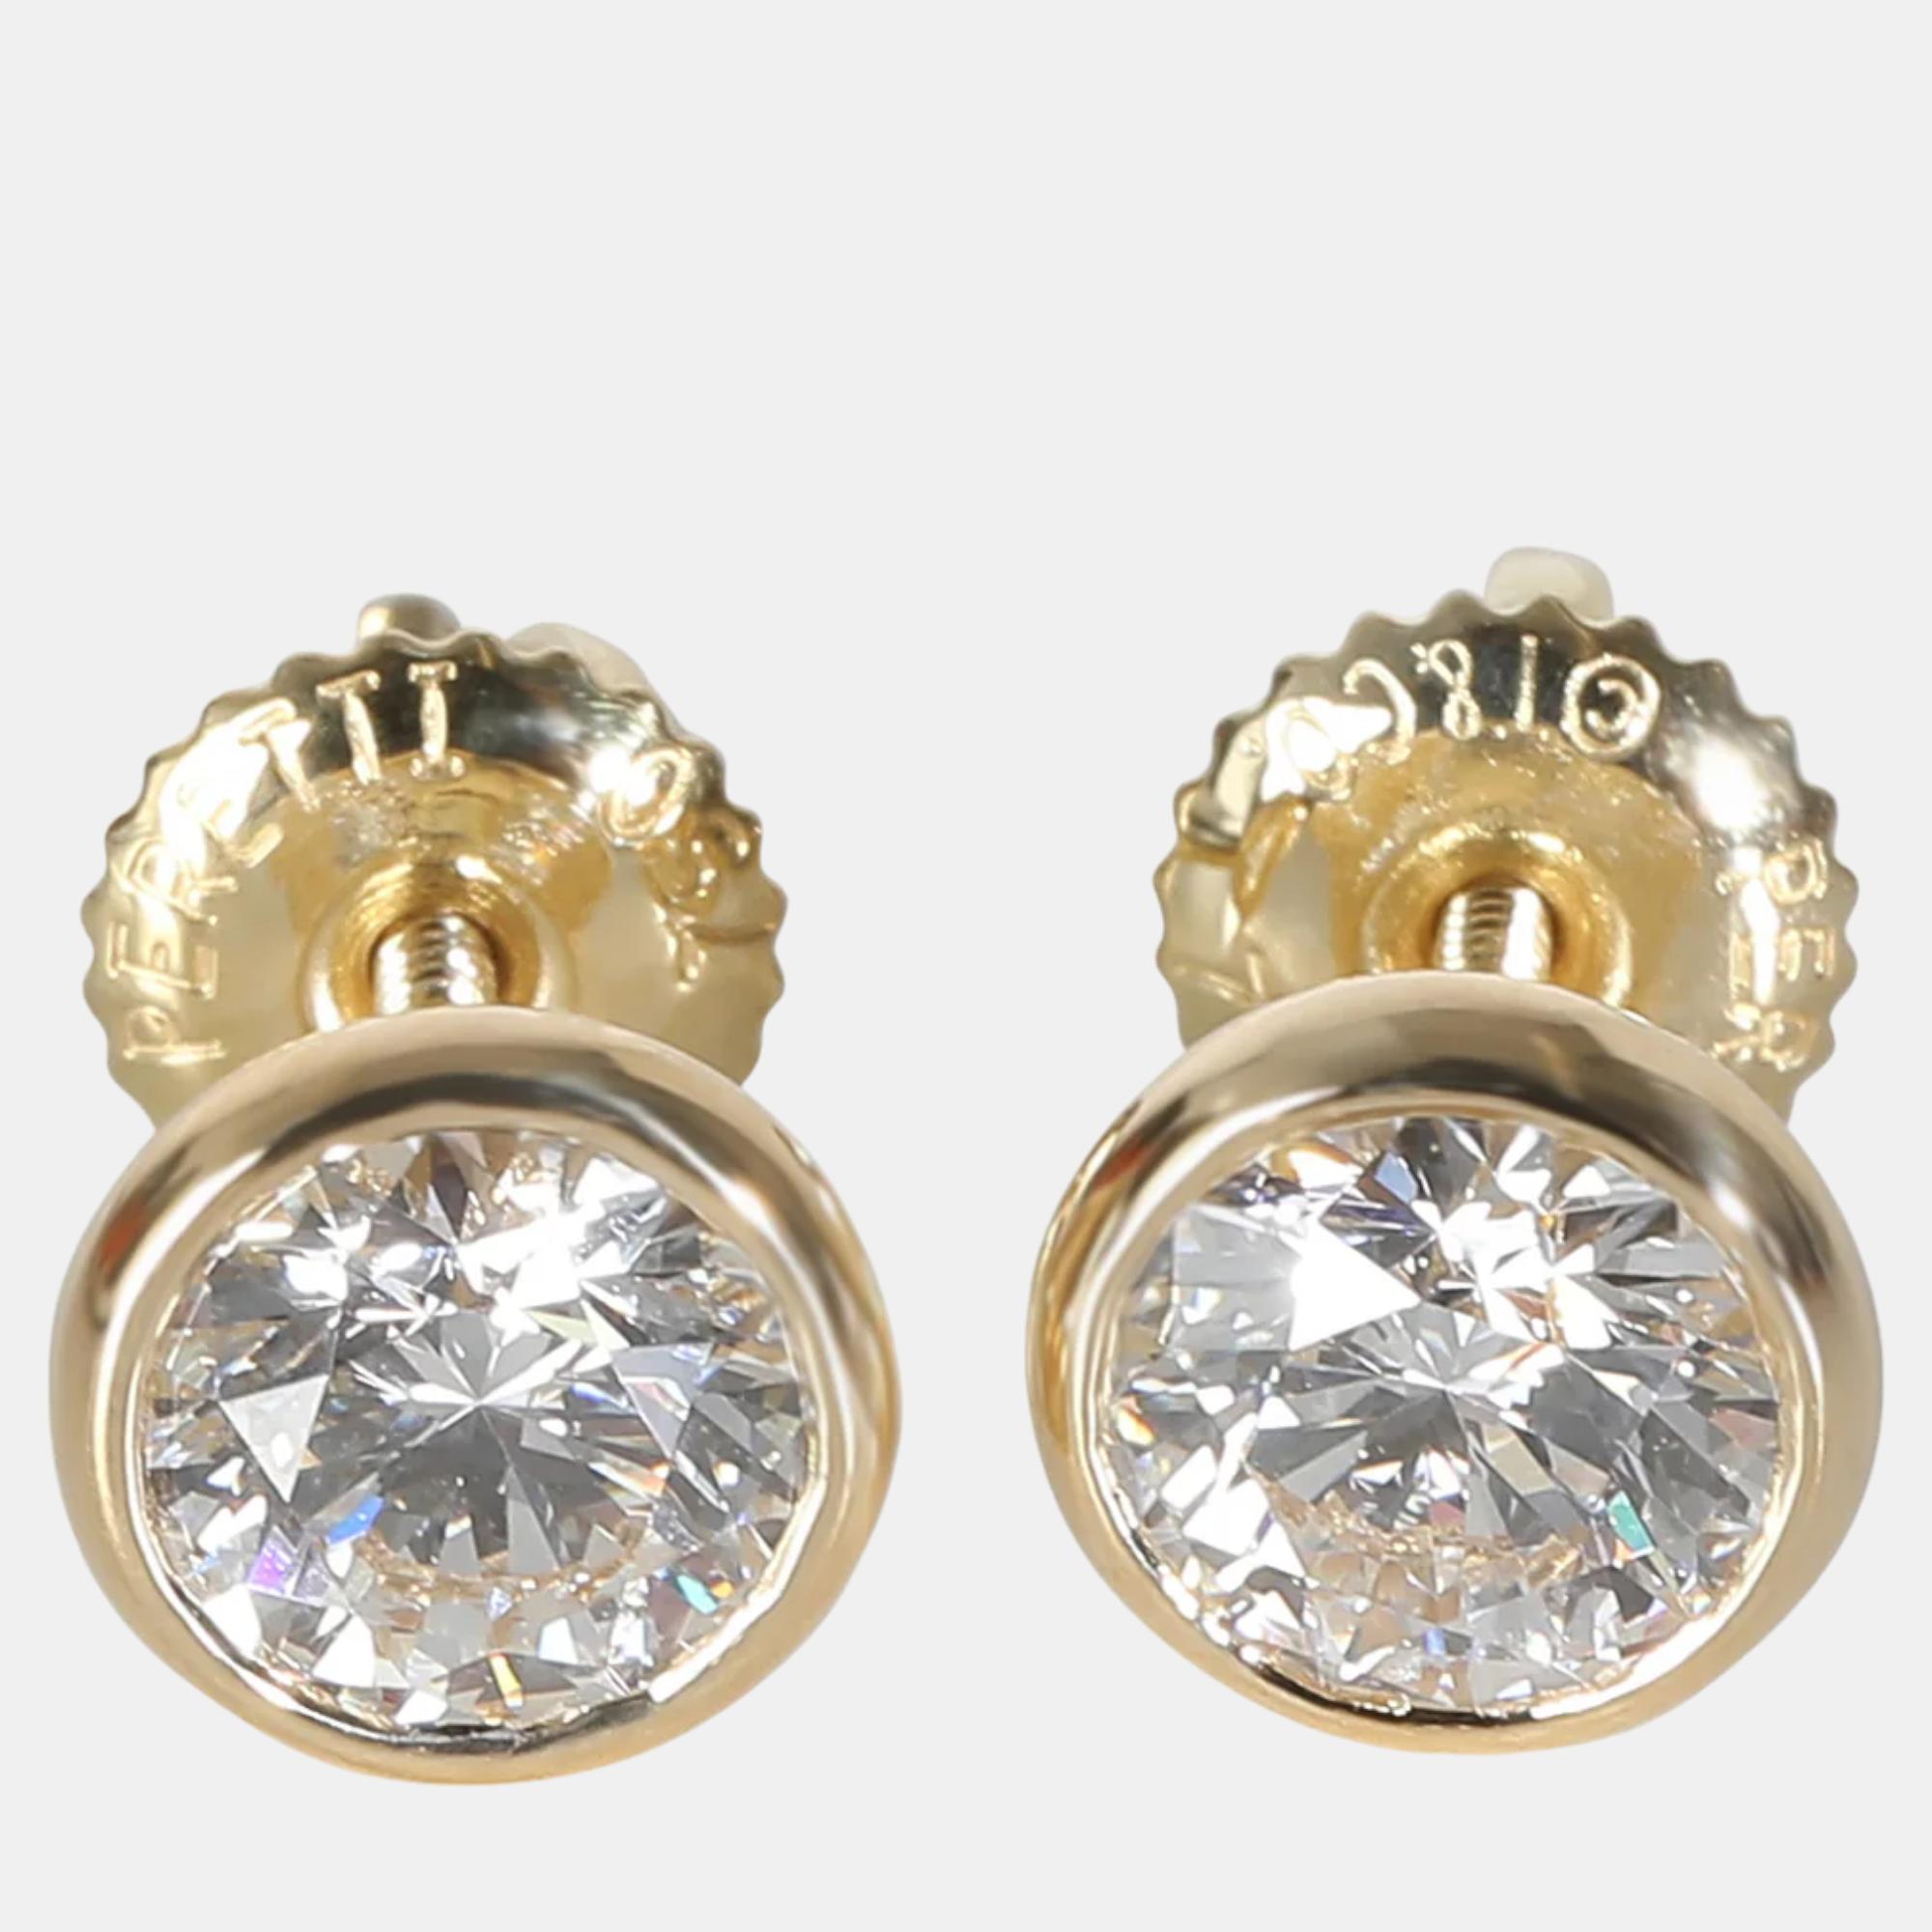 Tiffany & co. 18k yellow gold elsa peretti earrings